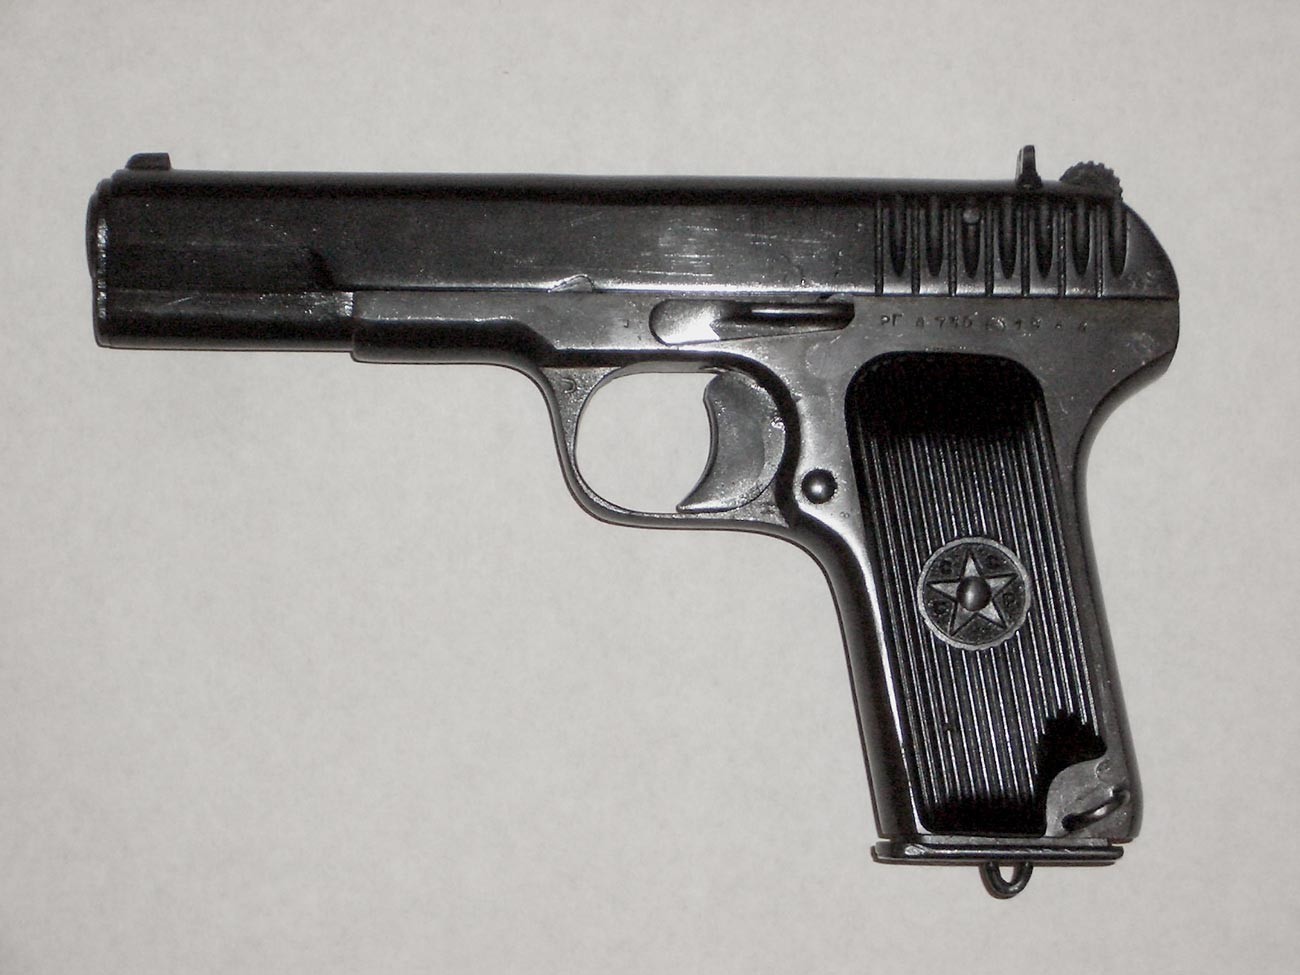 Pištolj TT proizveden u ratno doba